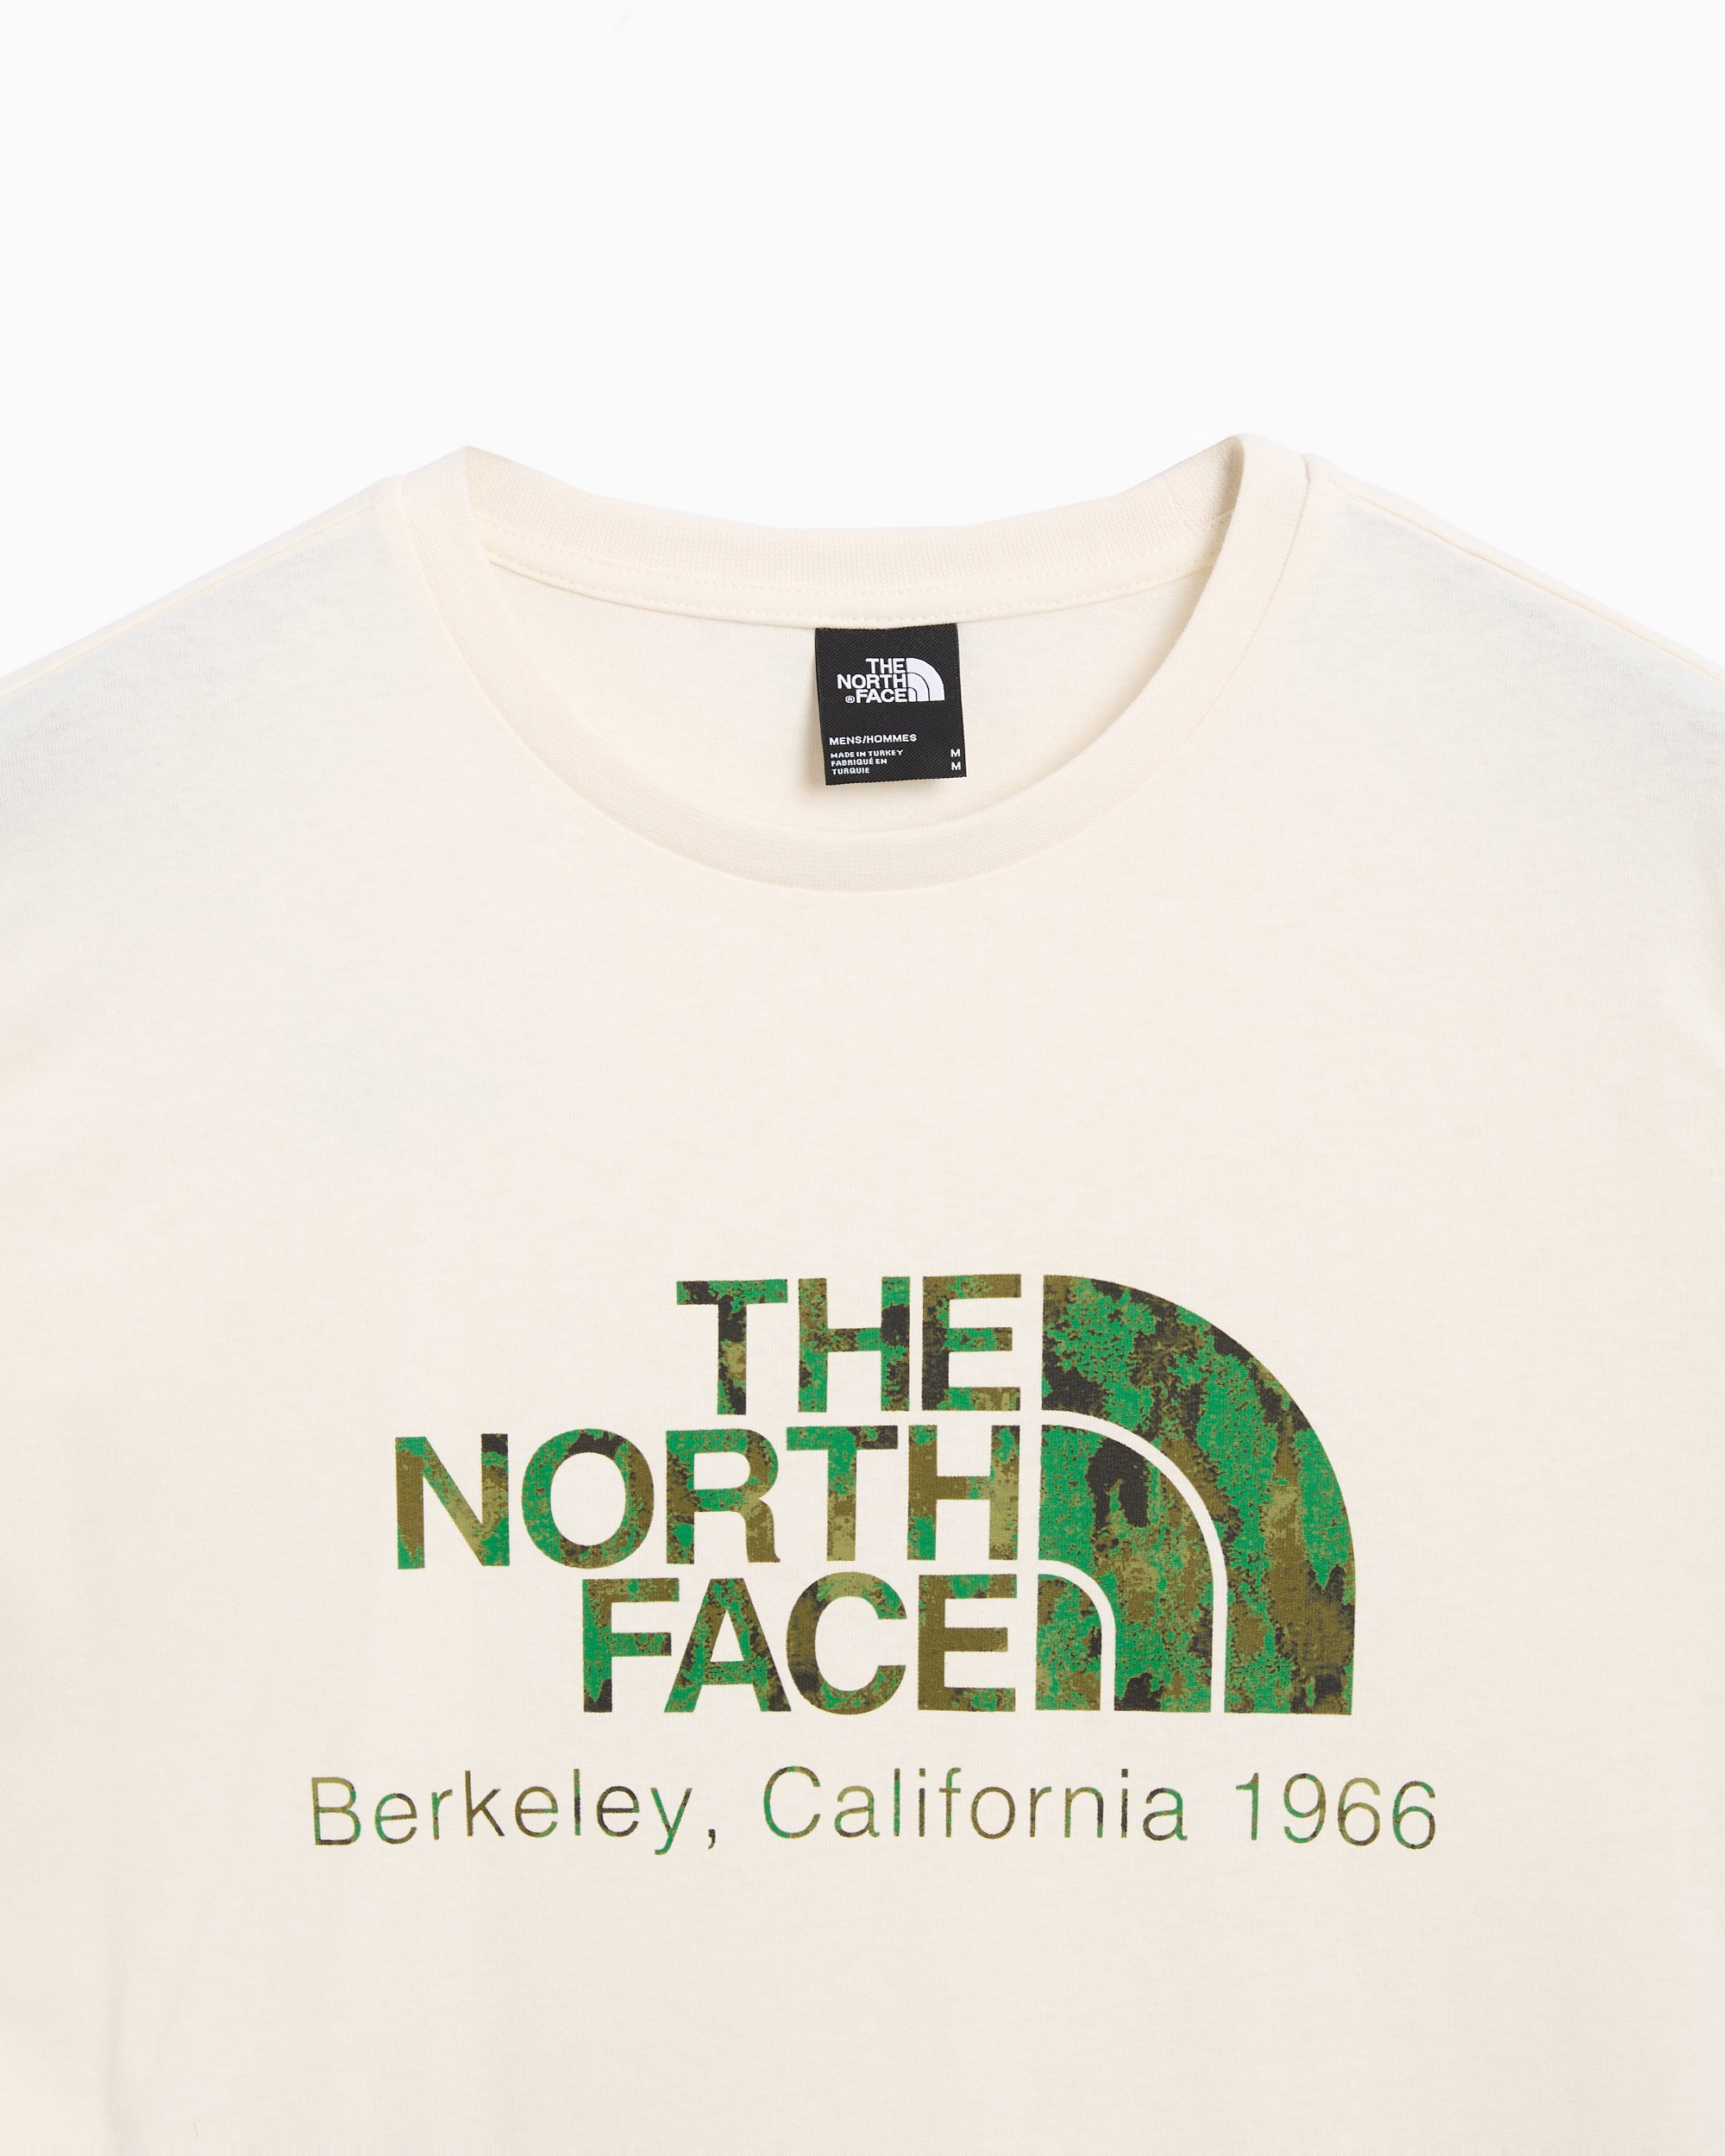 The North Face Berkeley California Men's T-Shirt Green, White NF0A87U5Y1O1